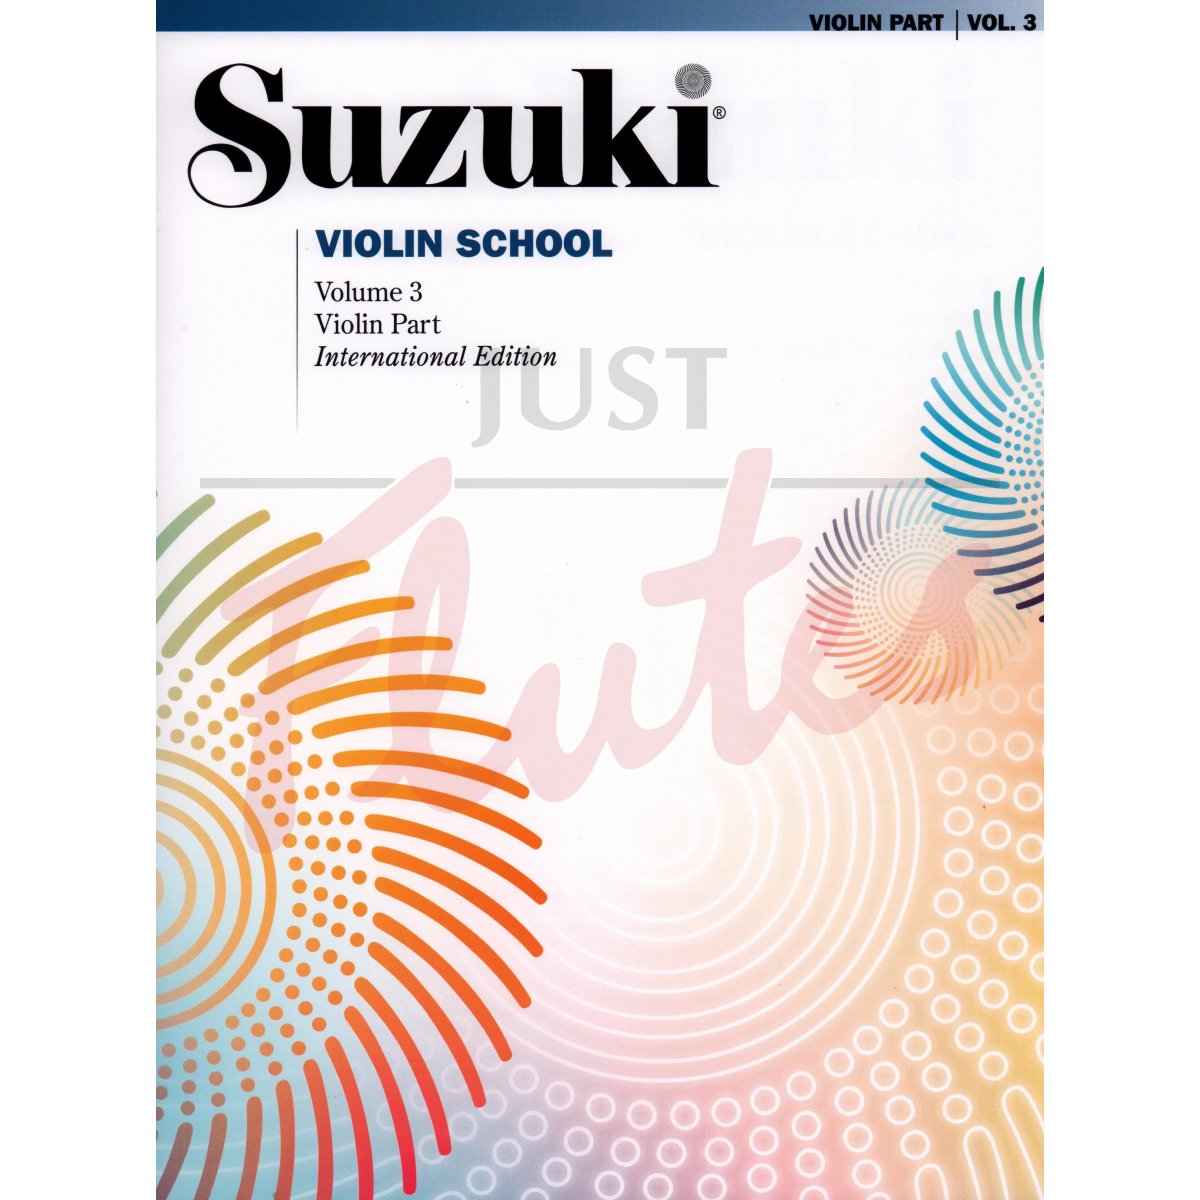 Suzuki Violin School Vol 3 (International Edition) [Violin Part]